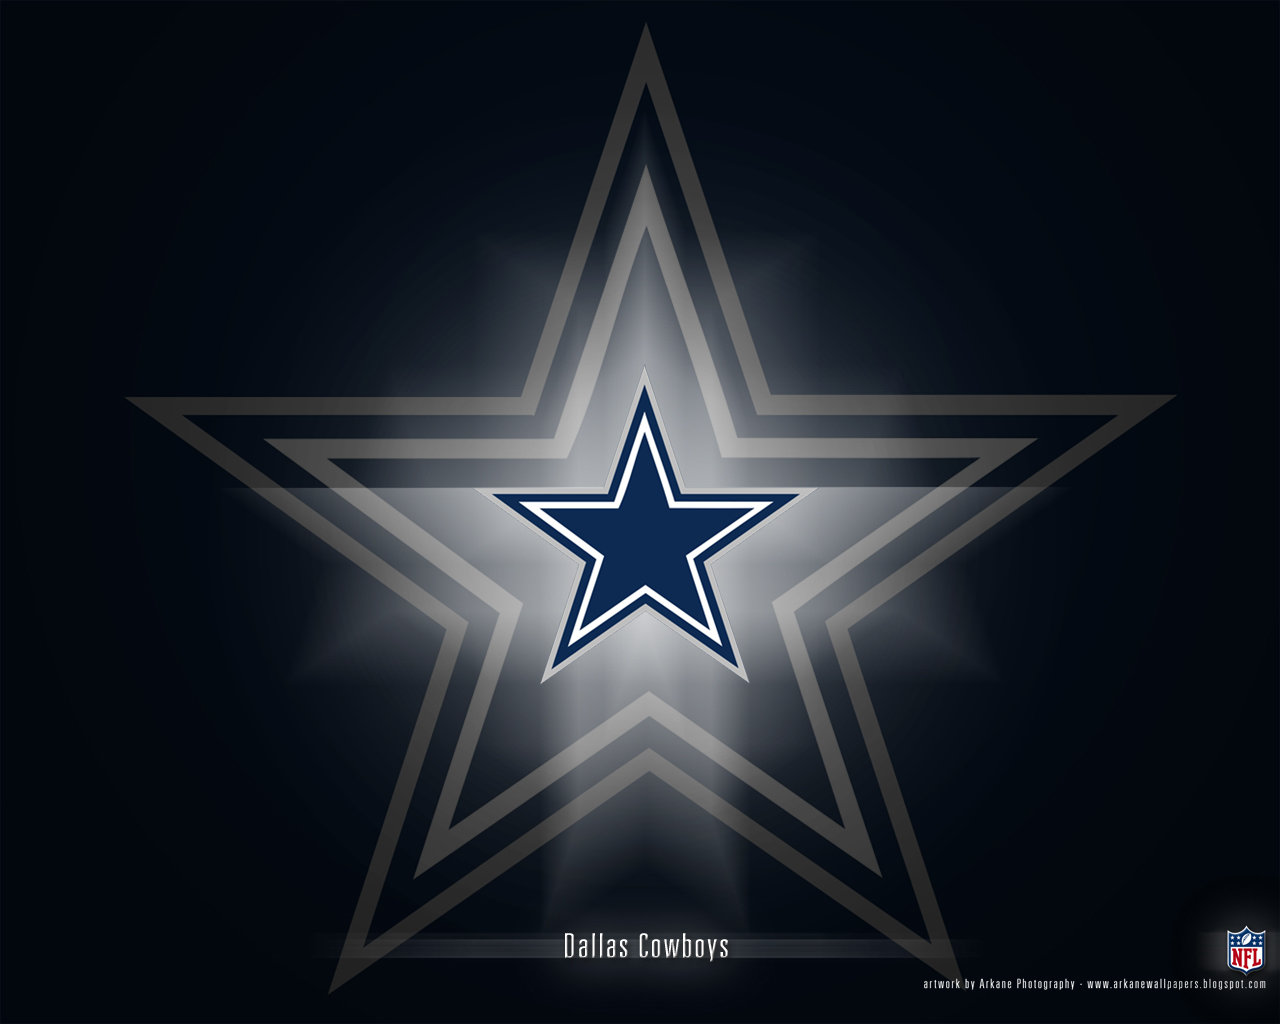 Awesome Dallas Cowboys free wallpaper ID:101575 for hd 1280x1024 desktop